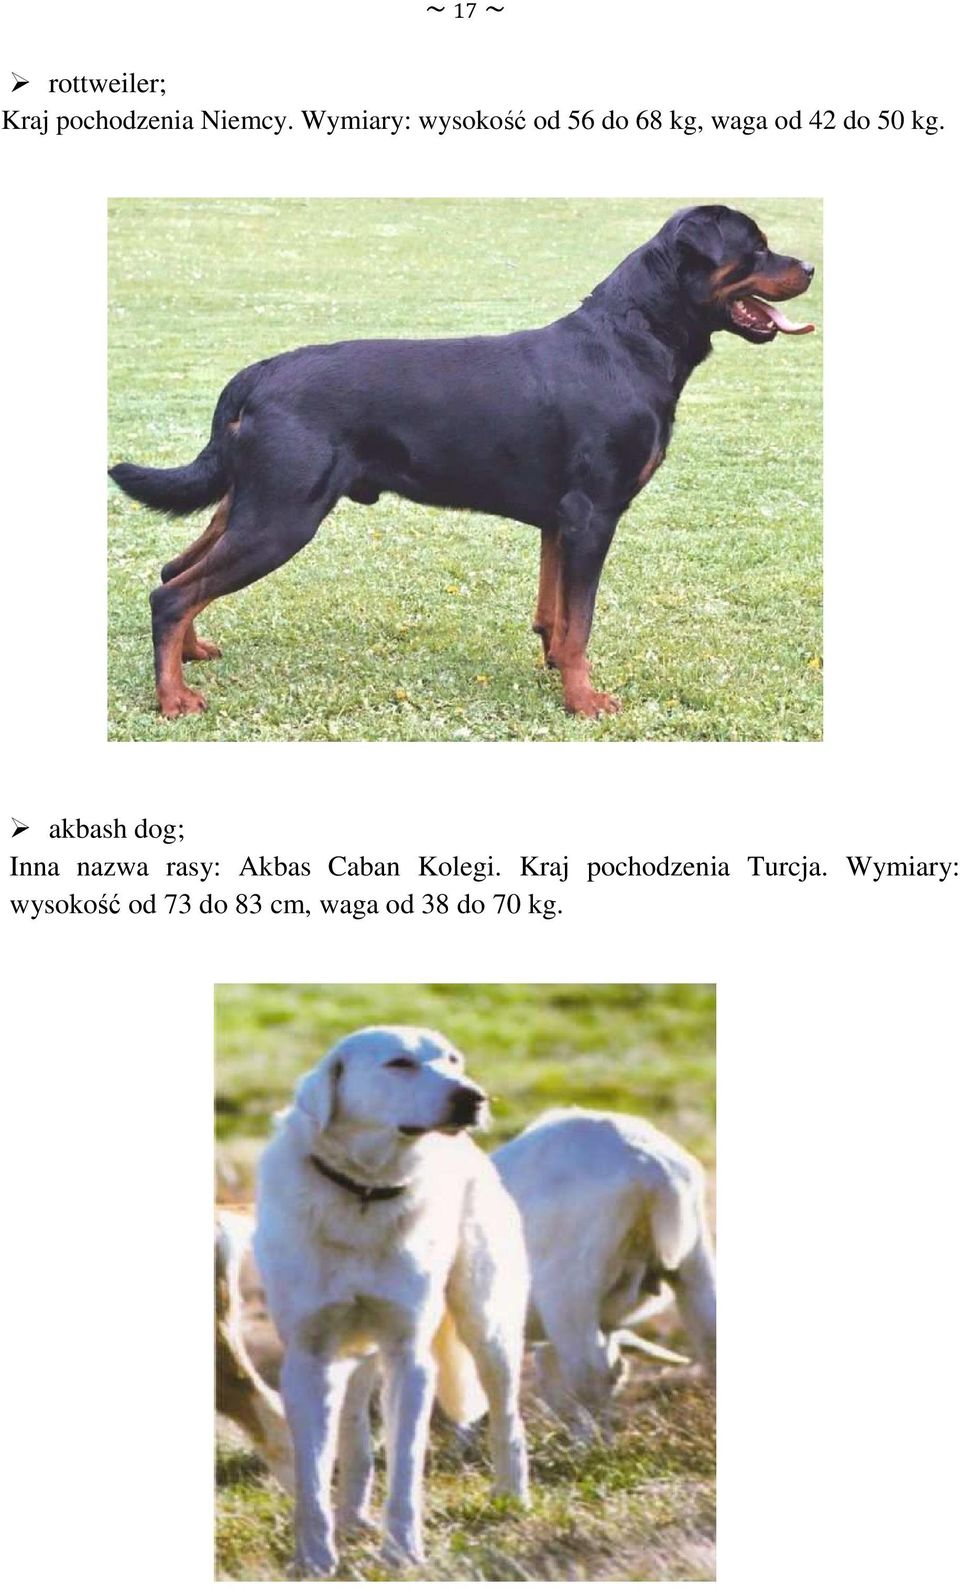 akbash dog; Inna nazwa rasy: Akbas Caban Kolegi.